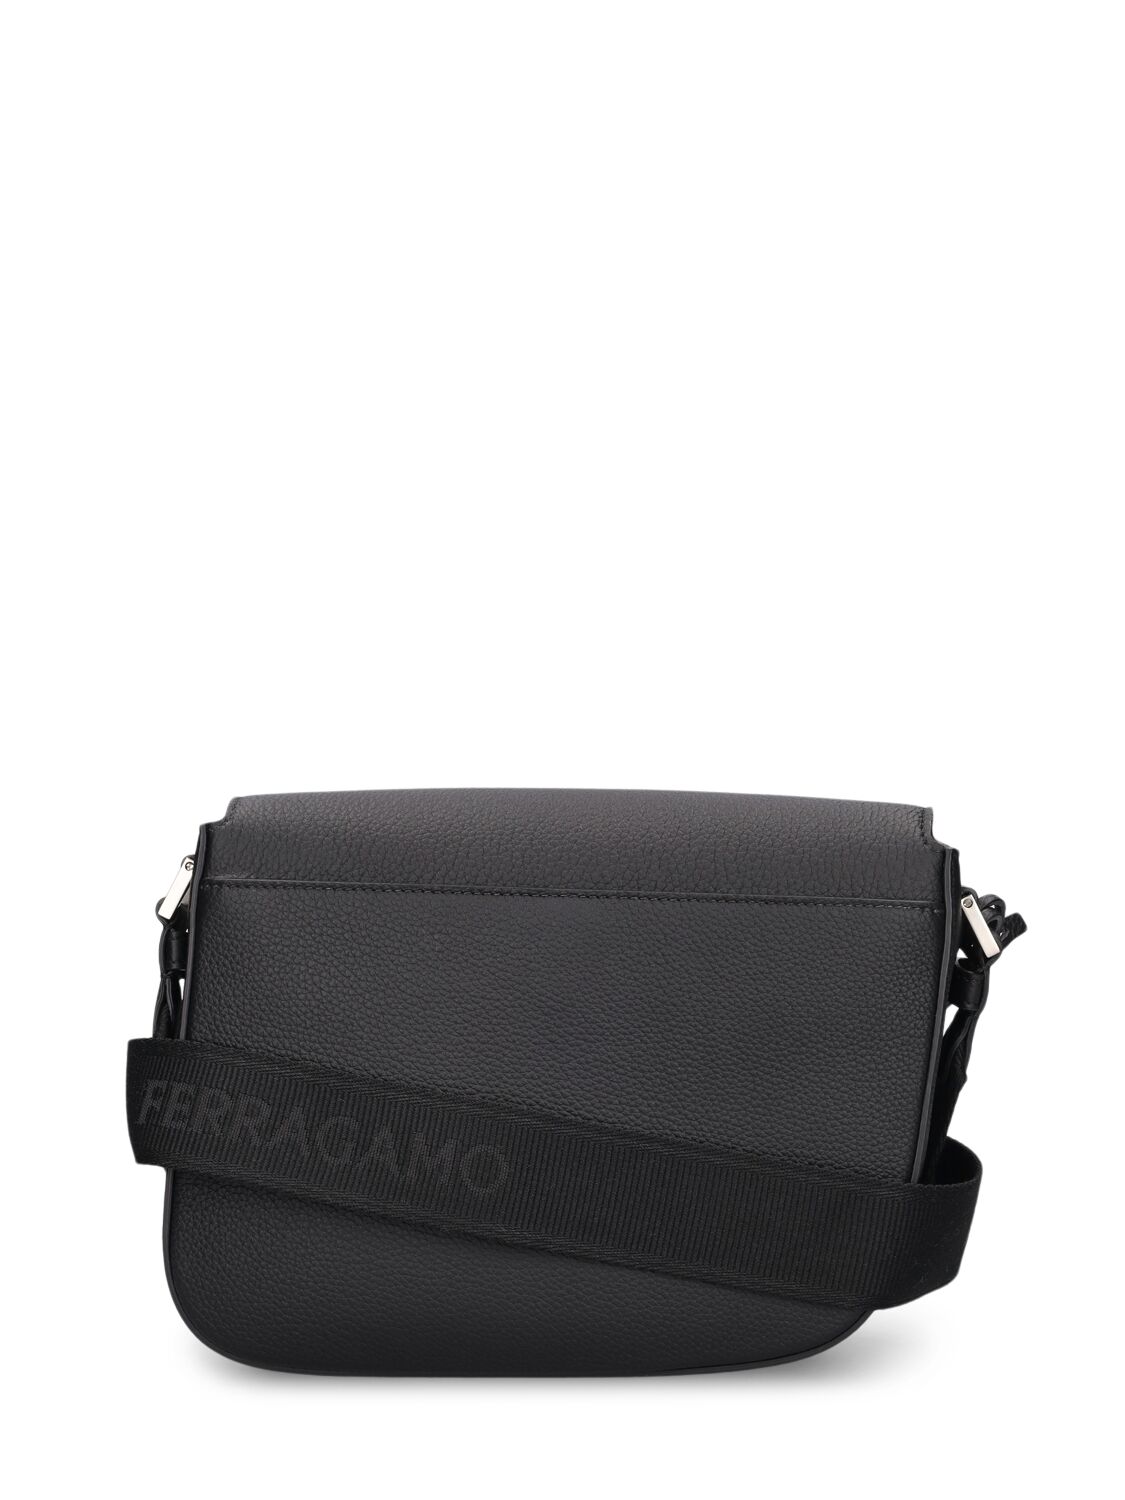 Shop Ferragamo Fiamma Leather Crossbody Bag In Black